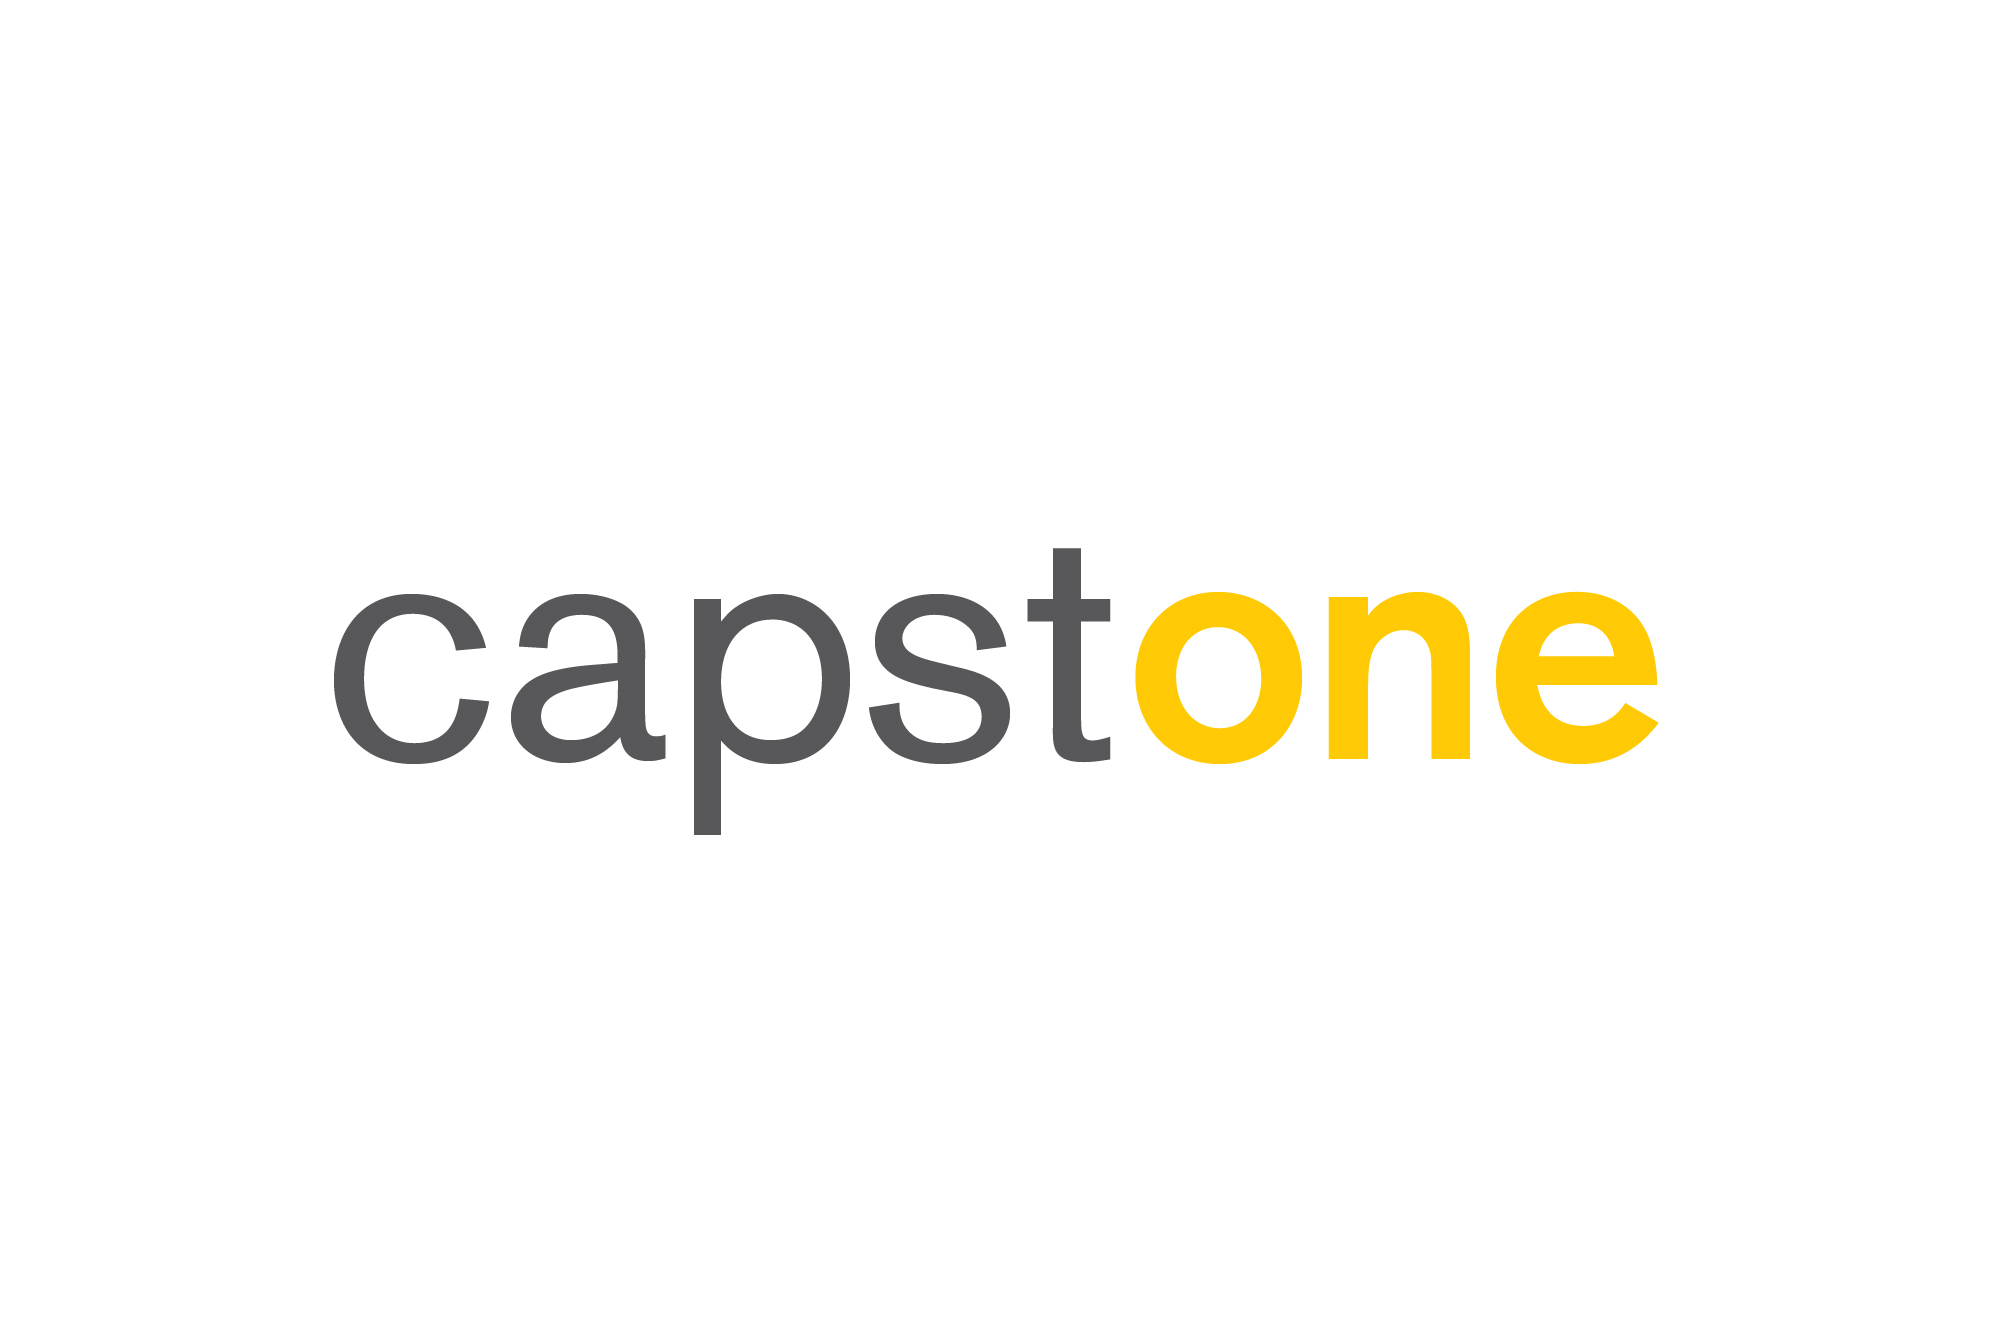 sarah holley design - capstone - logo